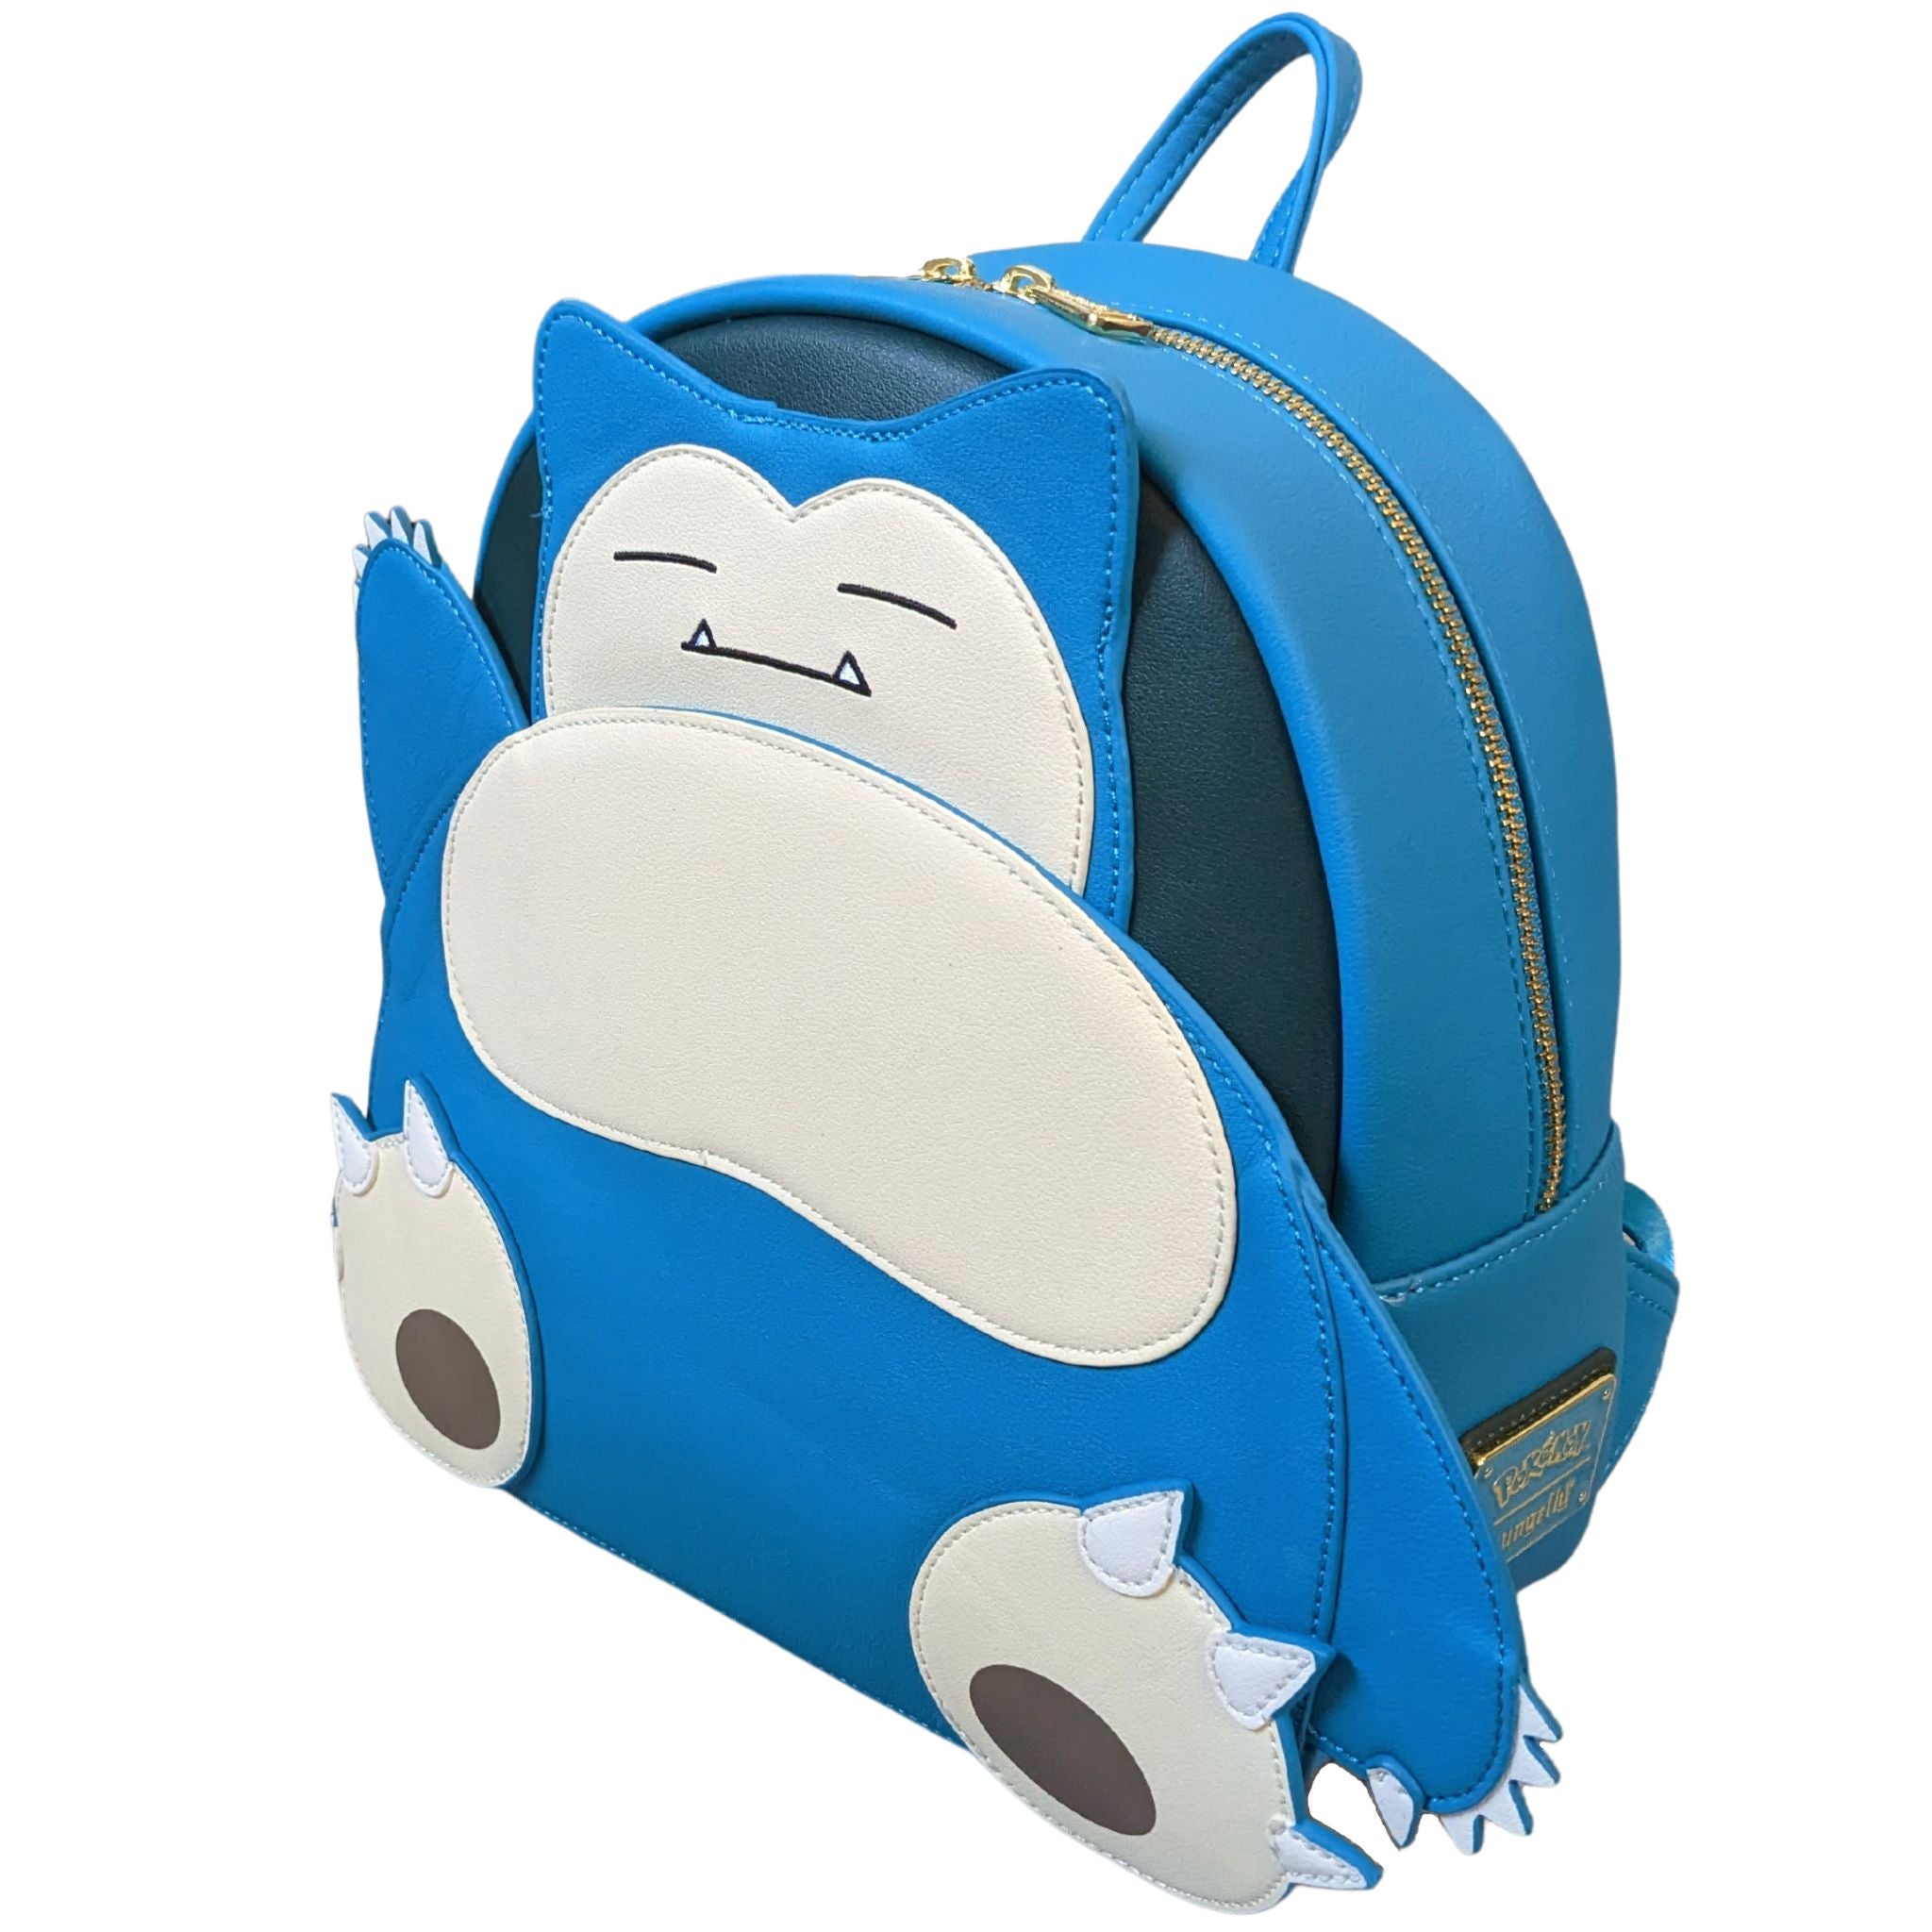 Pokemon Backpack, Pokemon Backpack Official Store, Loungefly Pokemon  Backpack